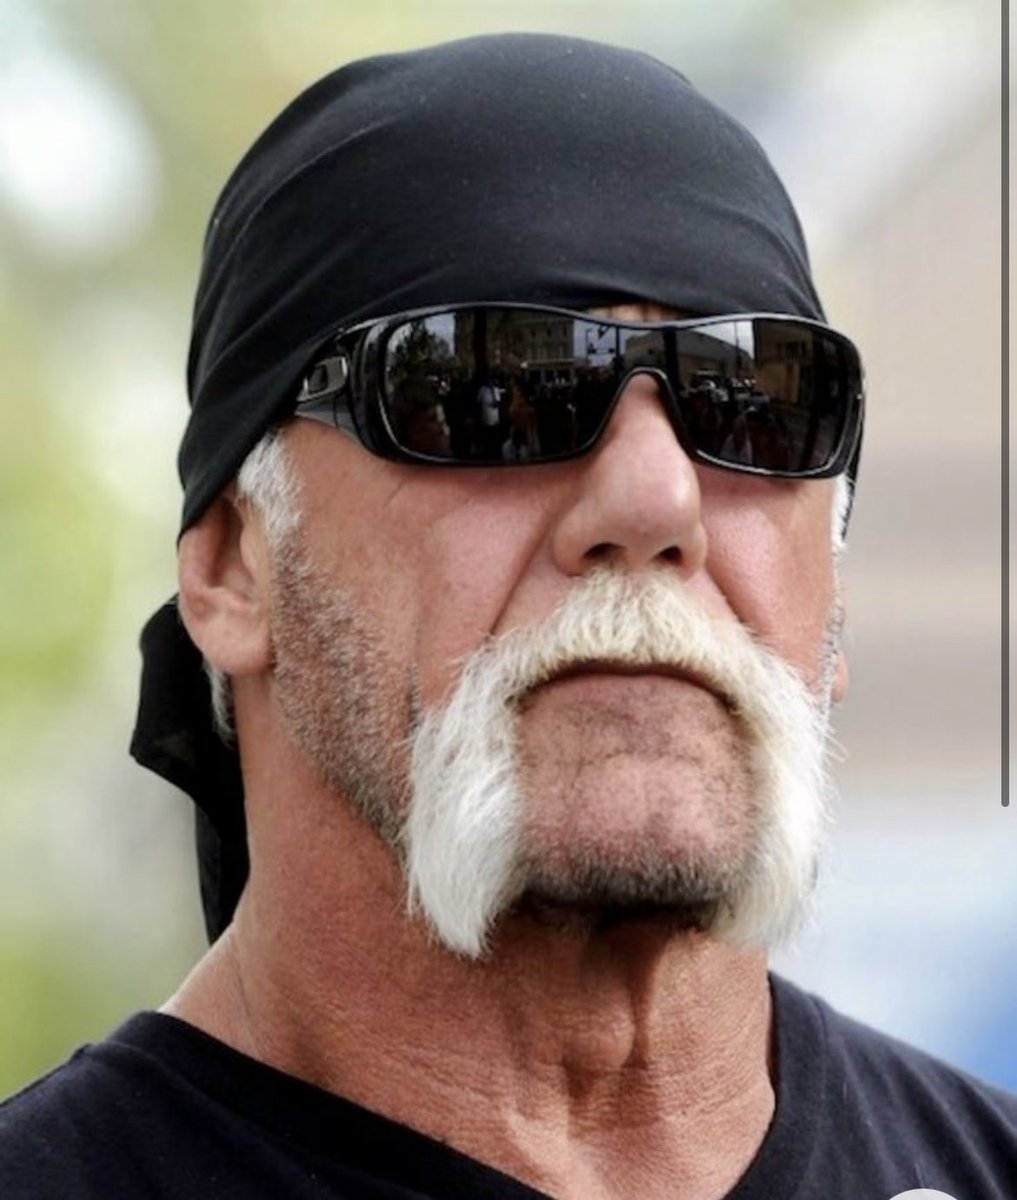 I think this fang look a bit like Hulk Hogan. #fangalike. 